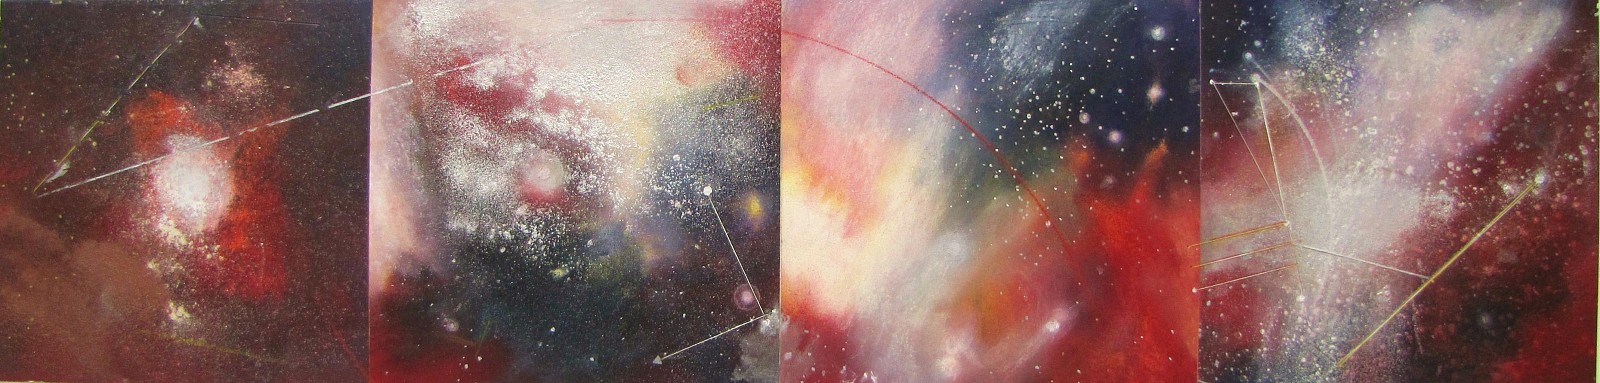 Cynthia Willett
Cone Nebula #4, 2012
mixed media on paper, 7 x 28 in.